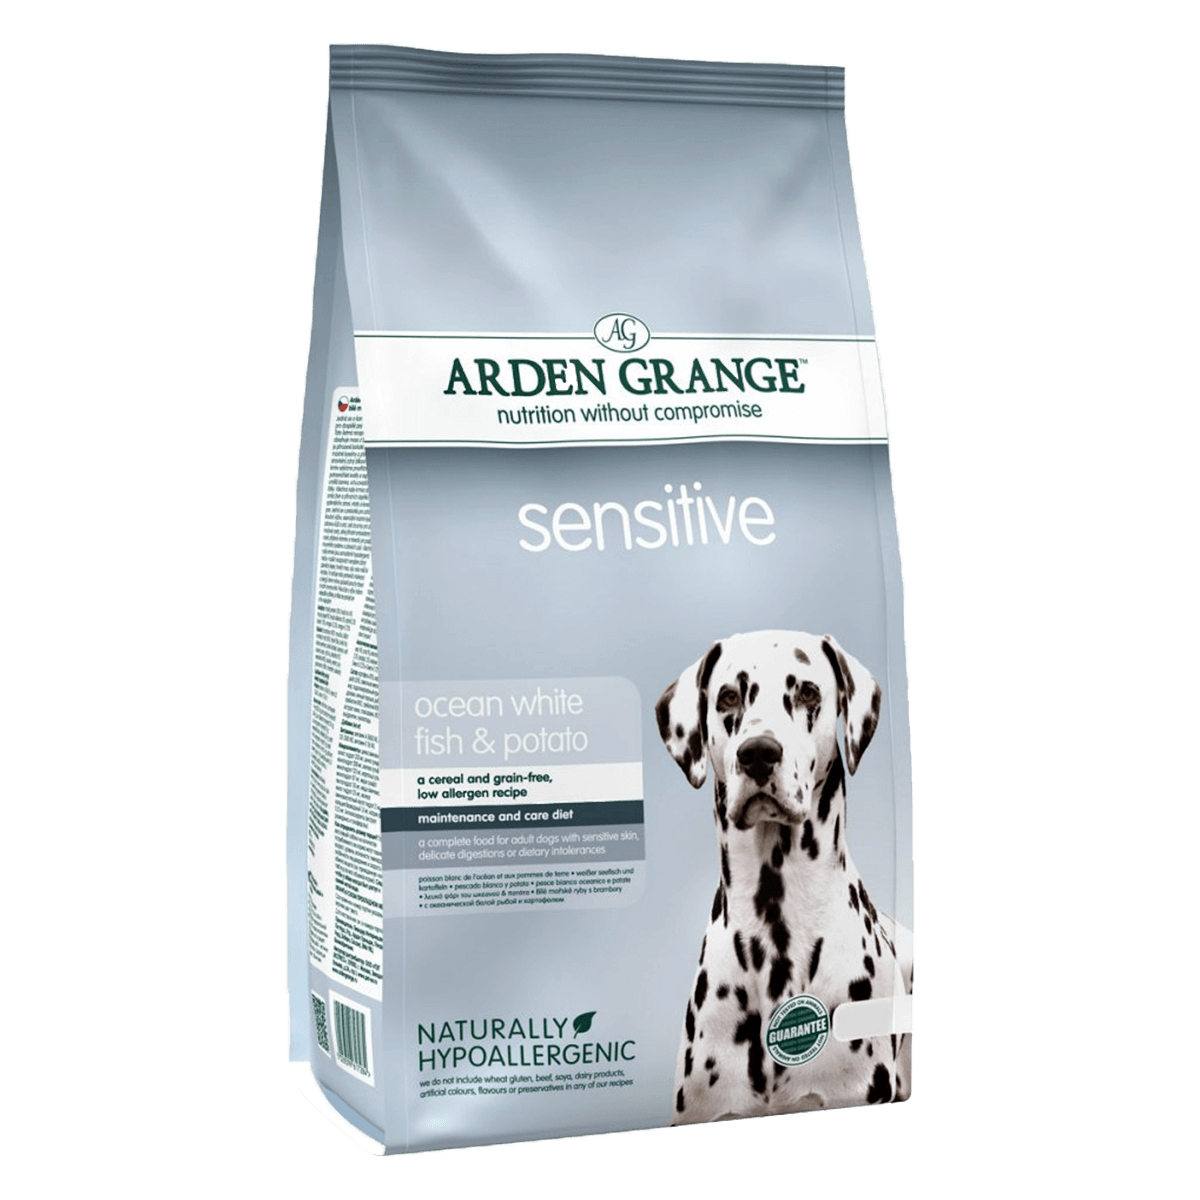 Arden Grange Adult Dog Sensitive 2 кг - корм Арден Гранж для взрослых собак